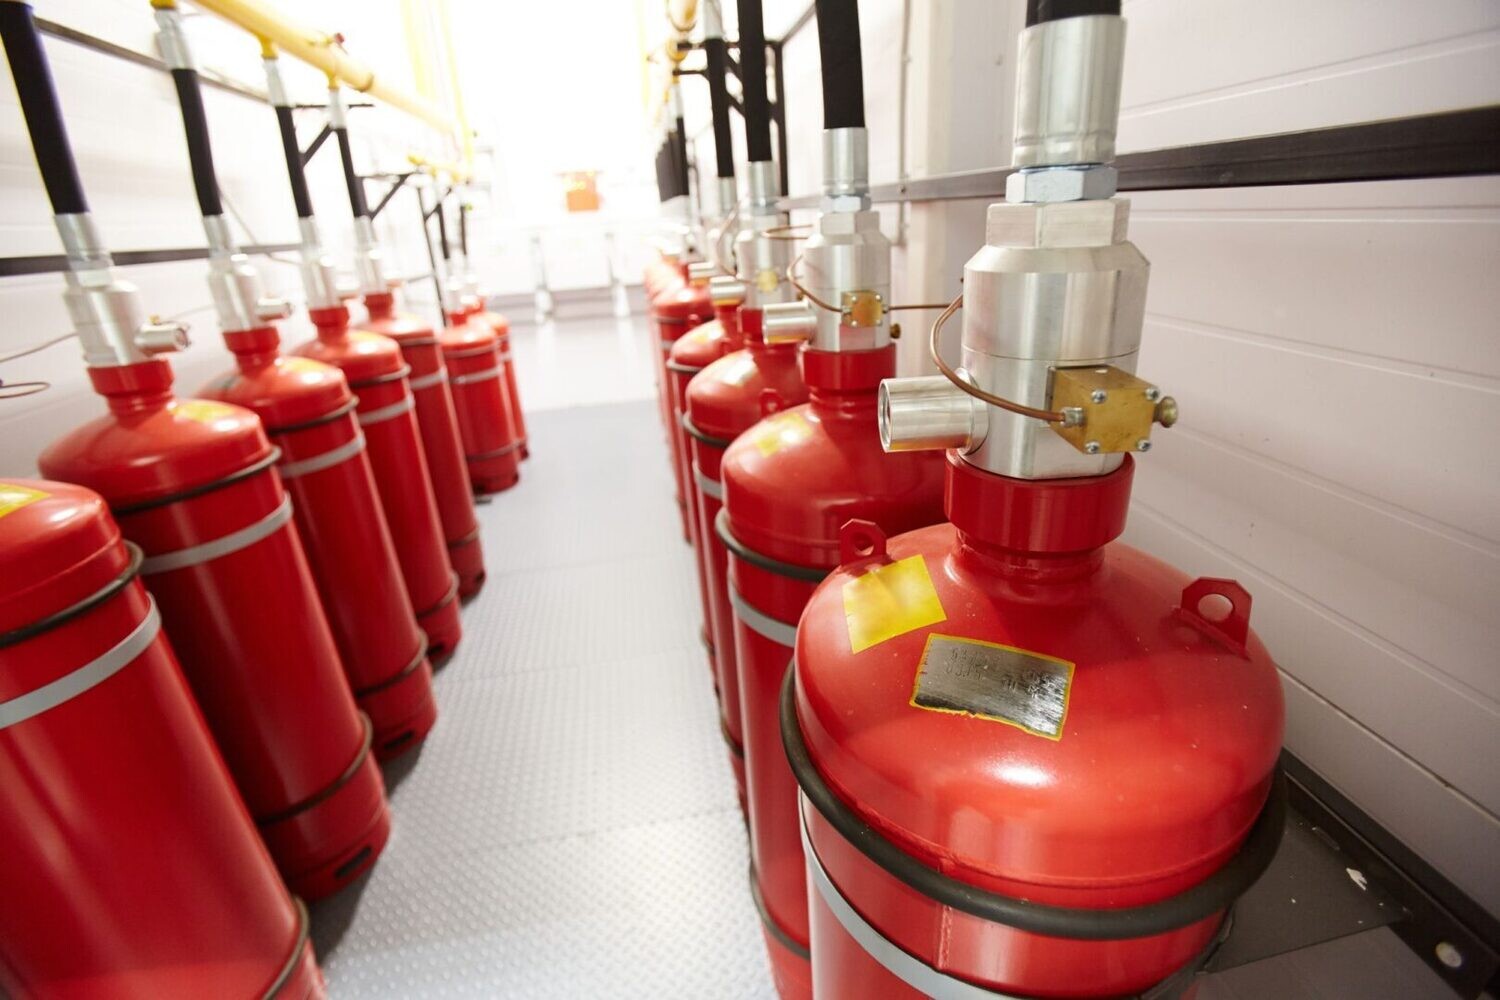 FM-200 fire extinguishing system